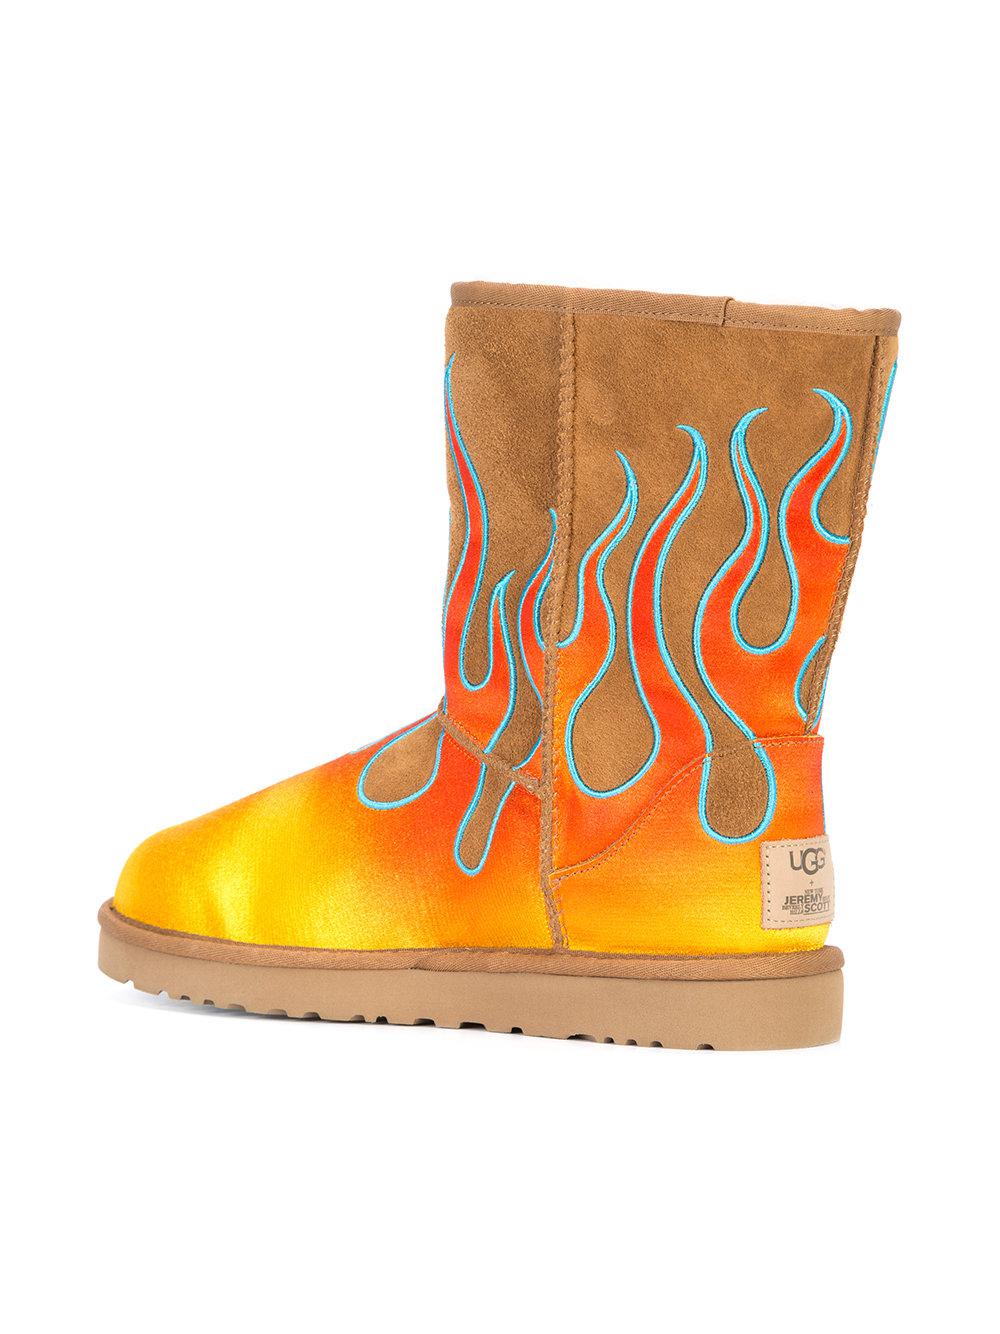 Jeremy Scott Ugg X Classic Short Flames Boots in Orange | Lyst